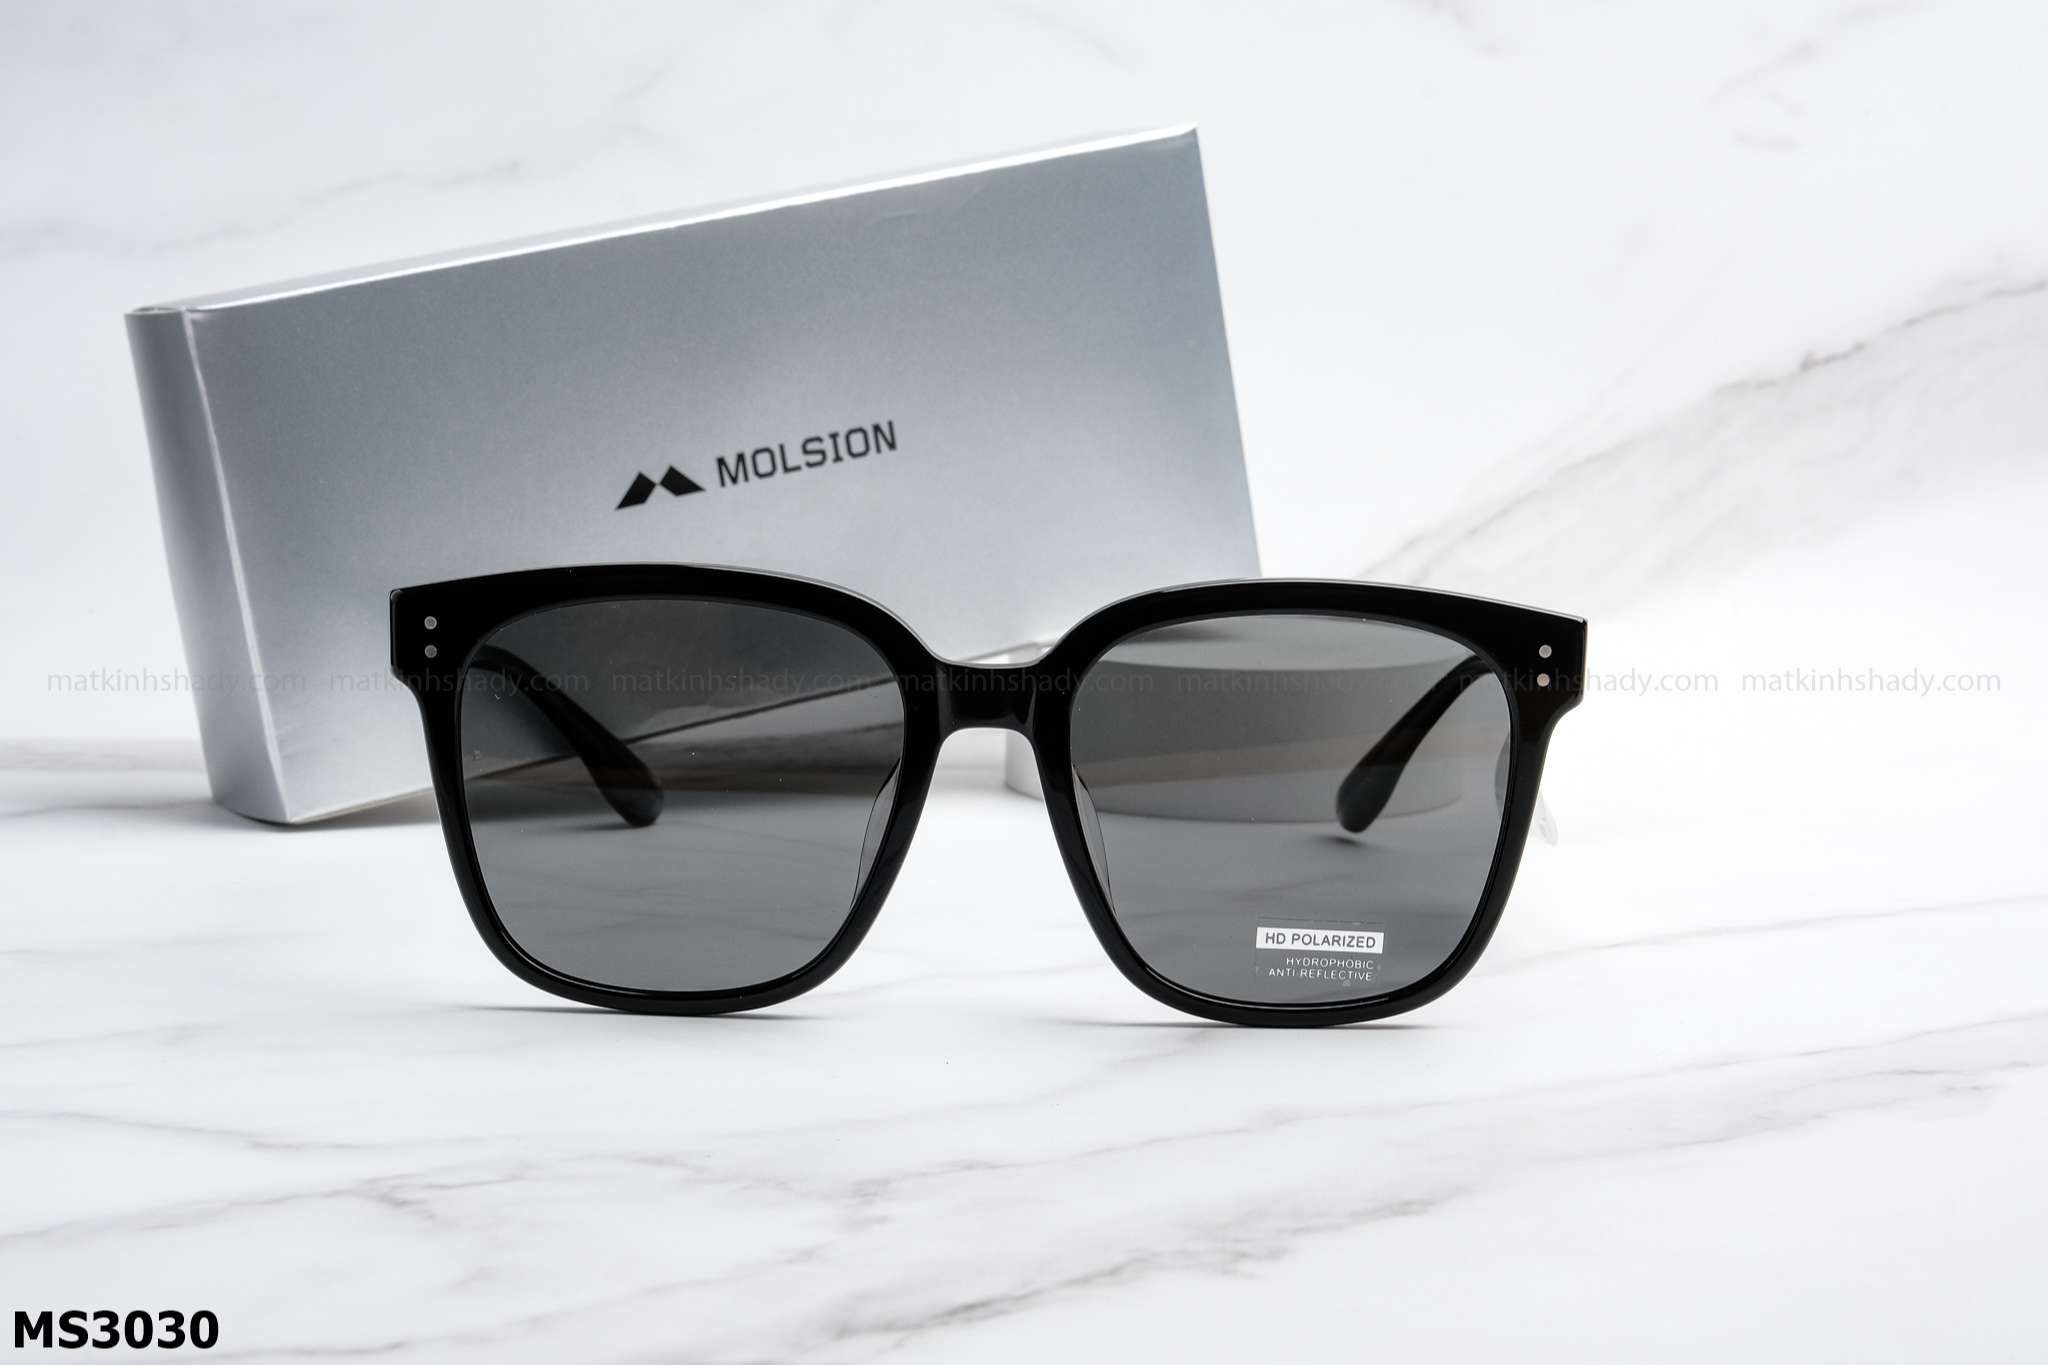  Molsion Eyewear - Sunglasses - MS3030 